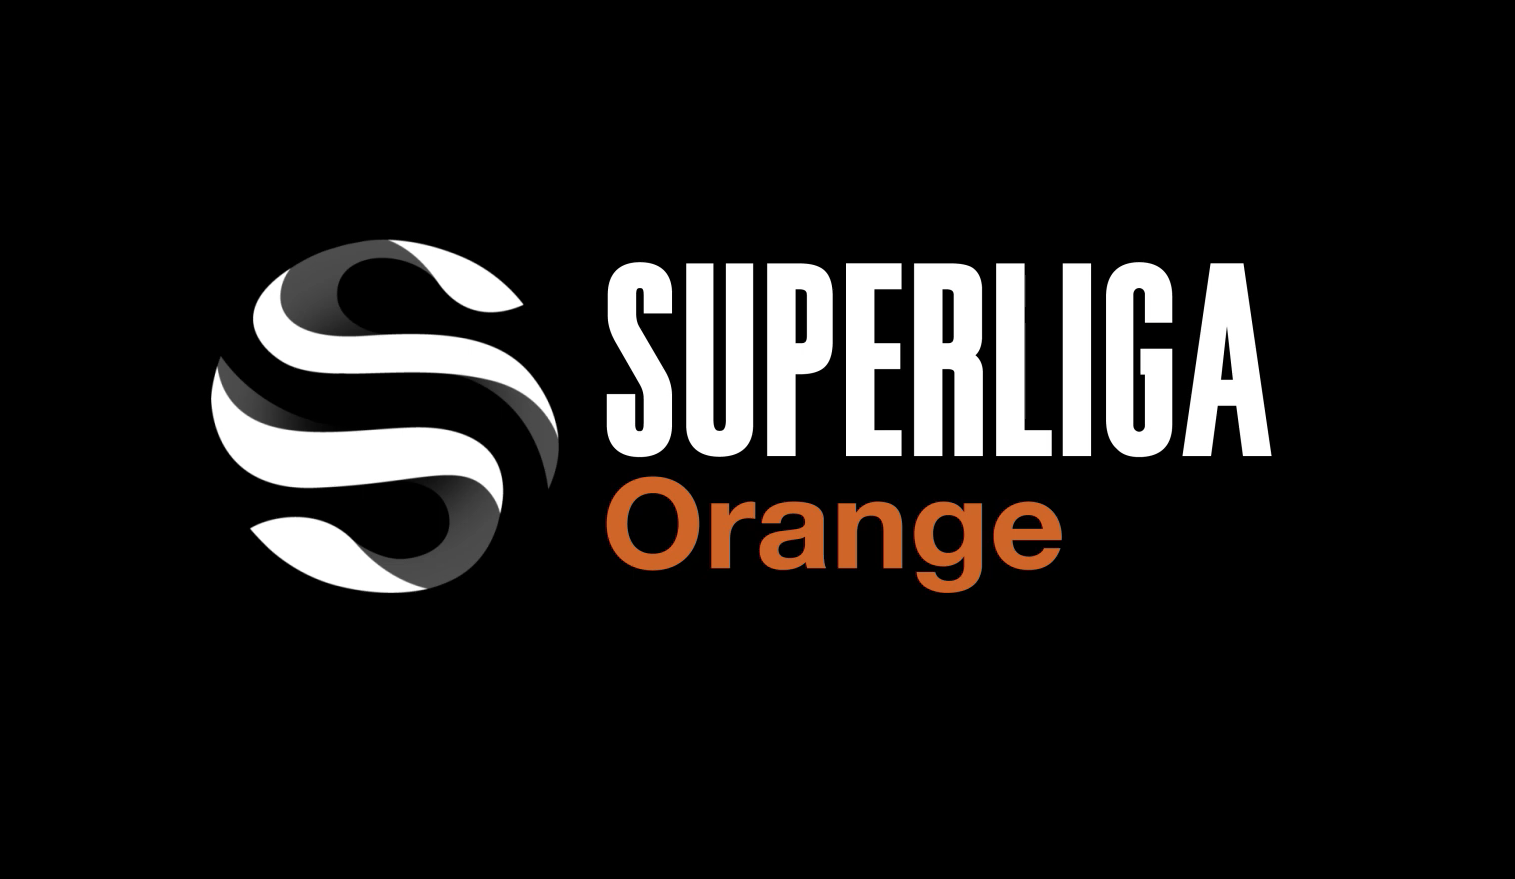 Superliga Orange